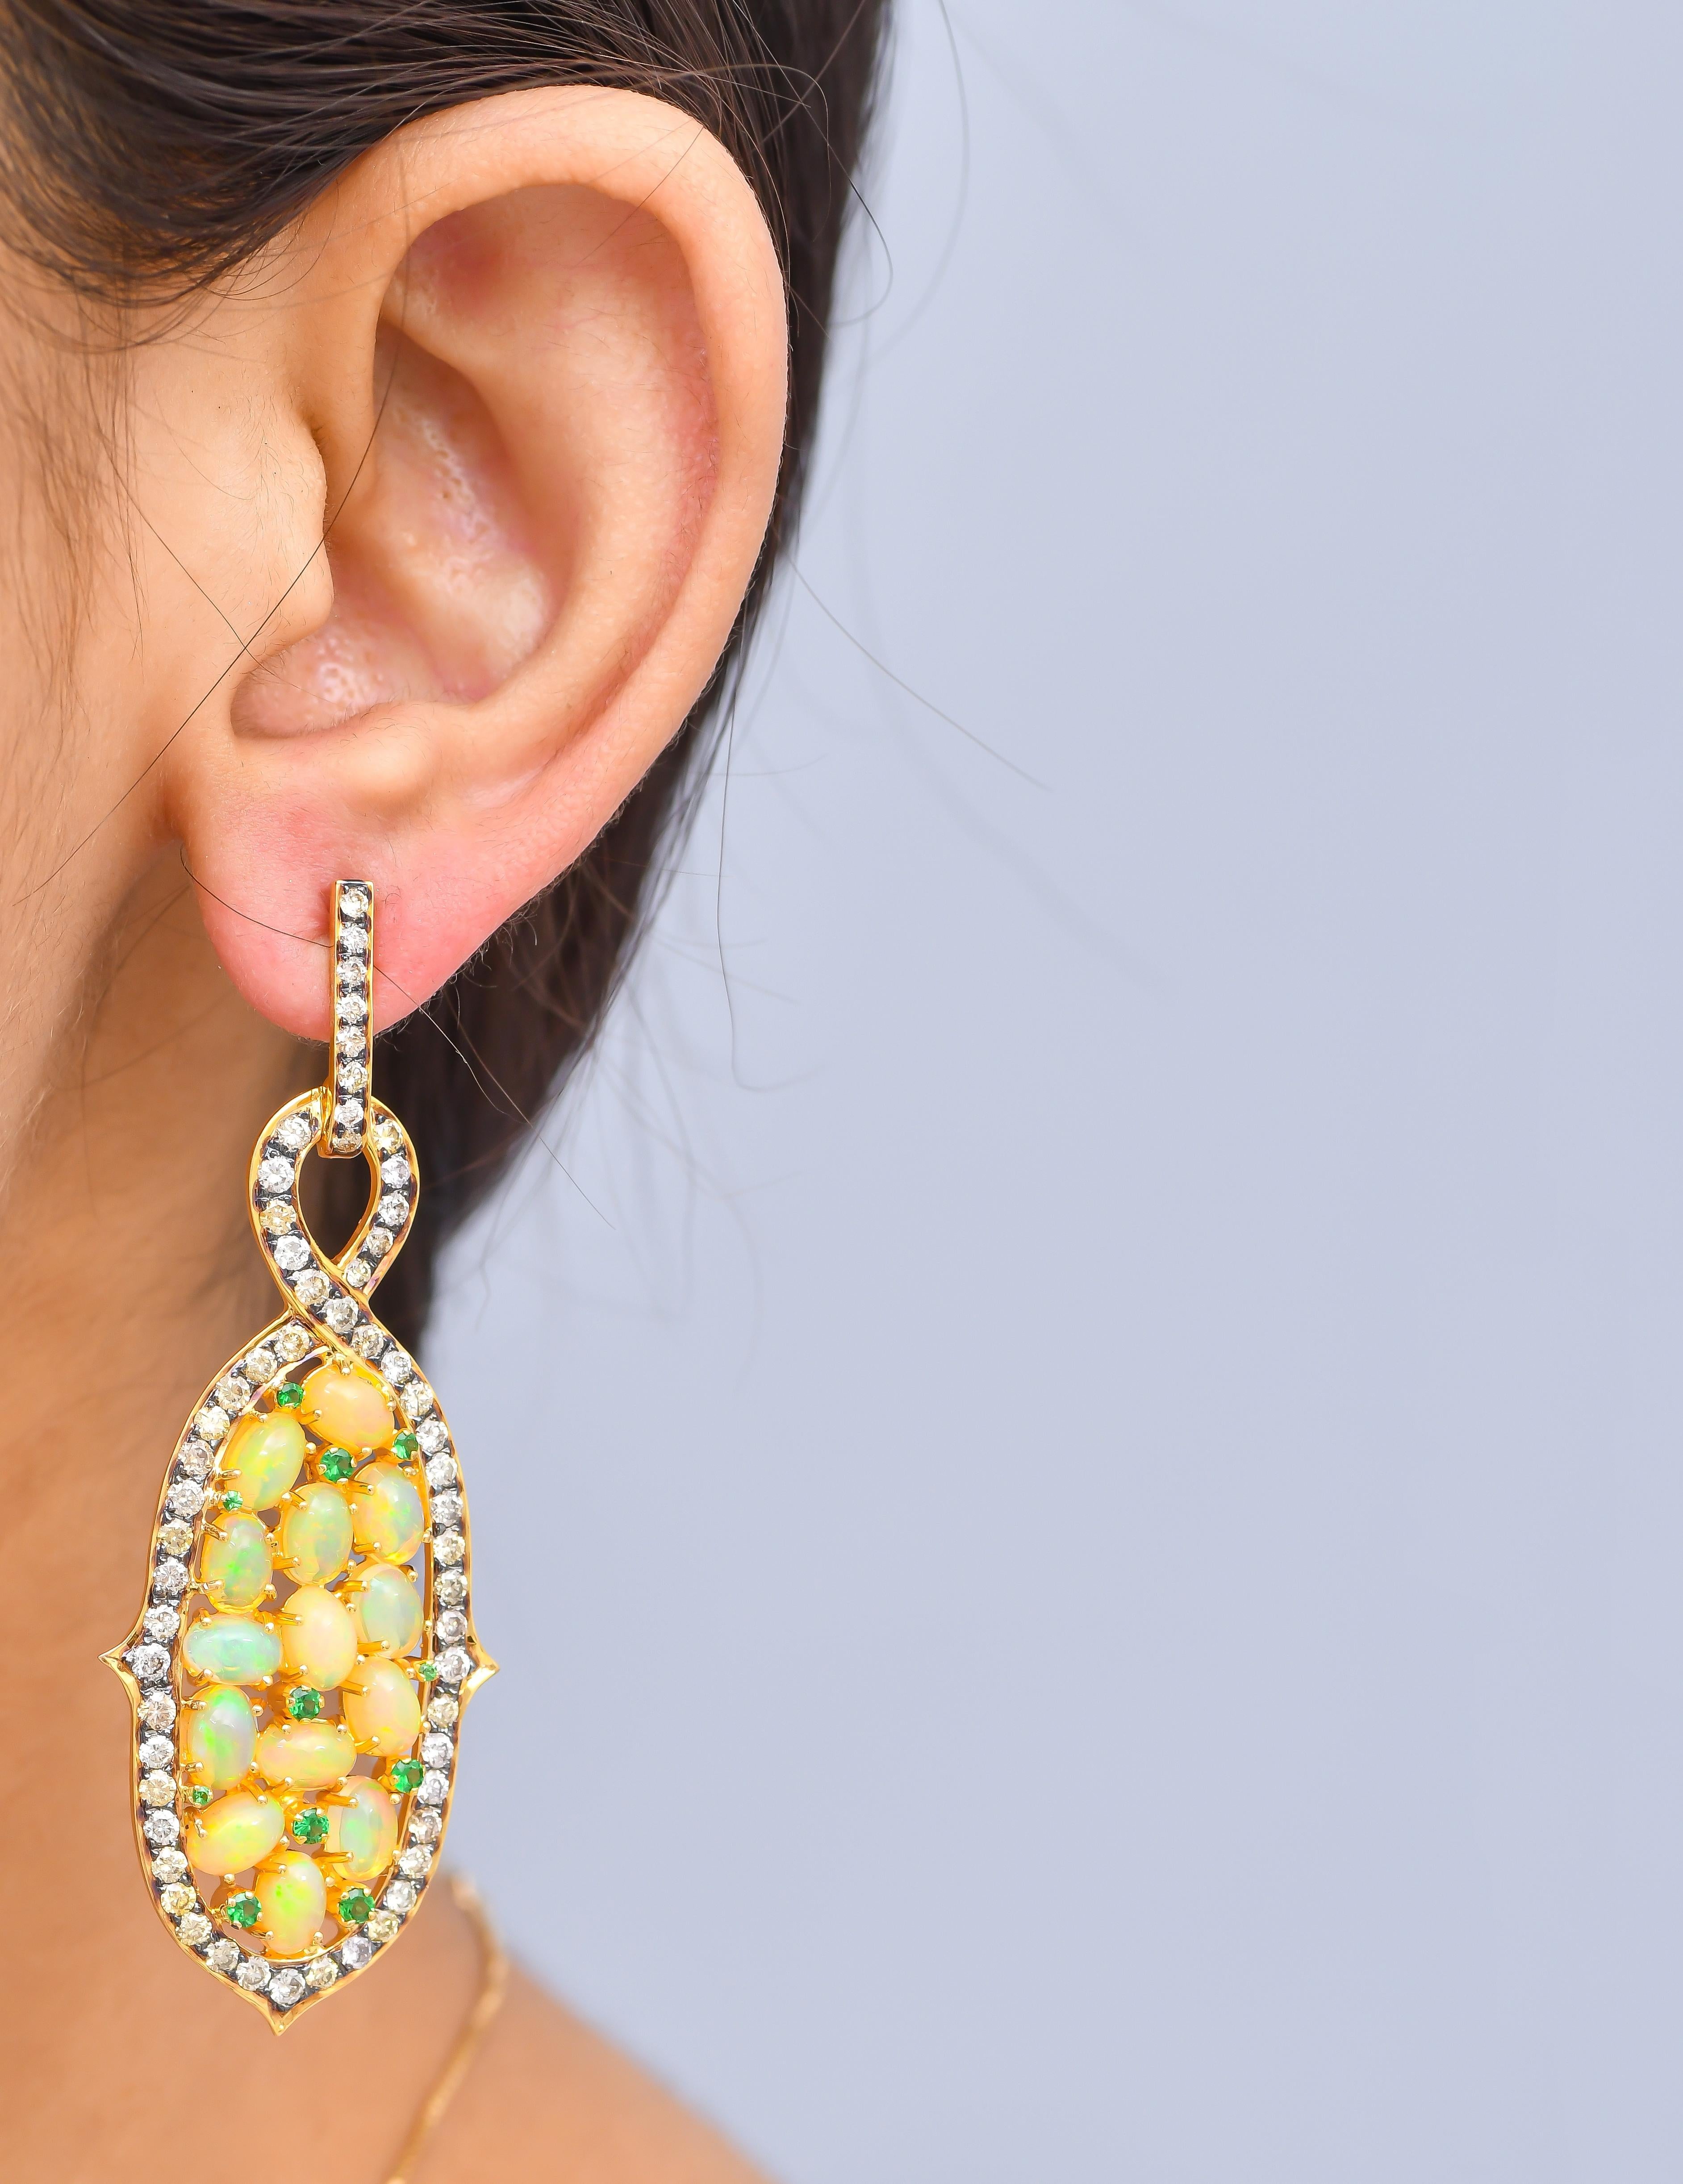 Oval Cut Opal Tsavorite Diamond Earrings Accented in 18 Karat Gold With Black Rhodium For Sale